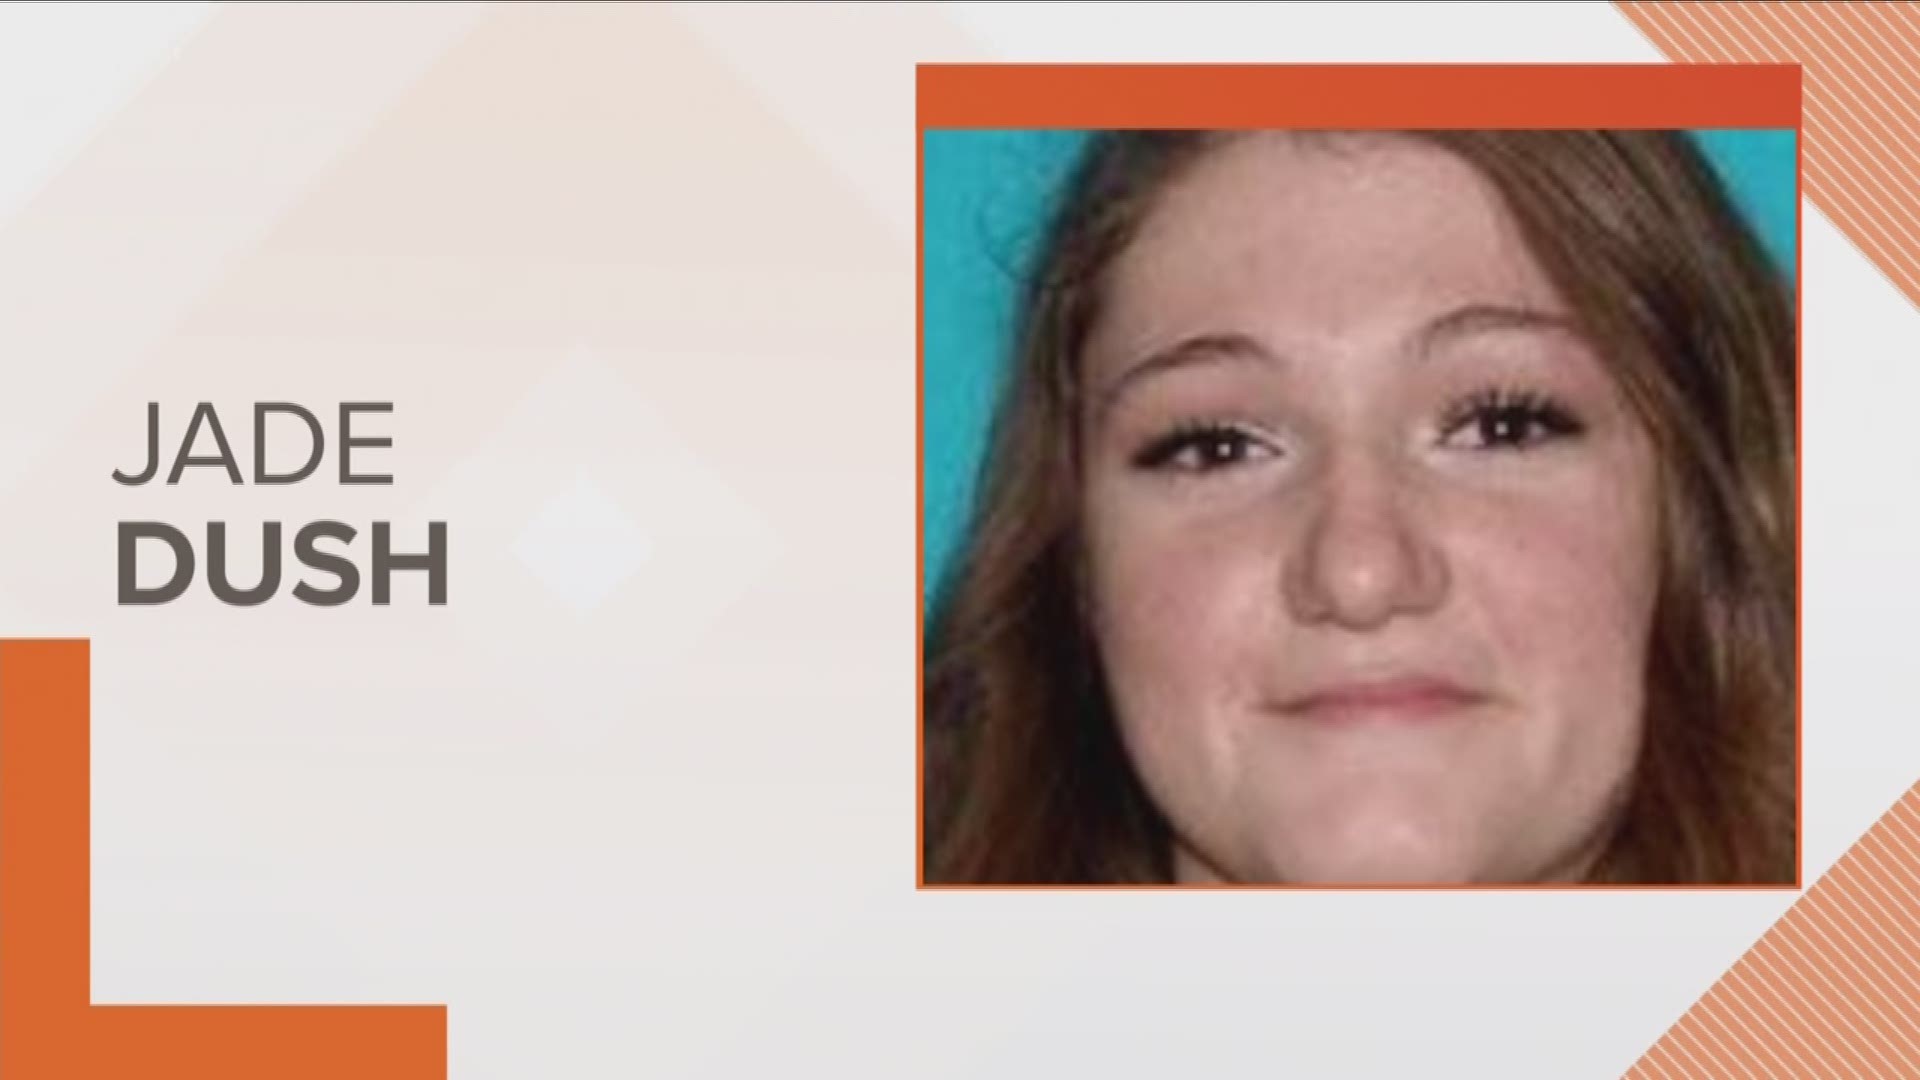 Oak Ridge Police say Jade Dush was found safe overnight.